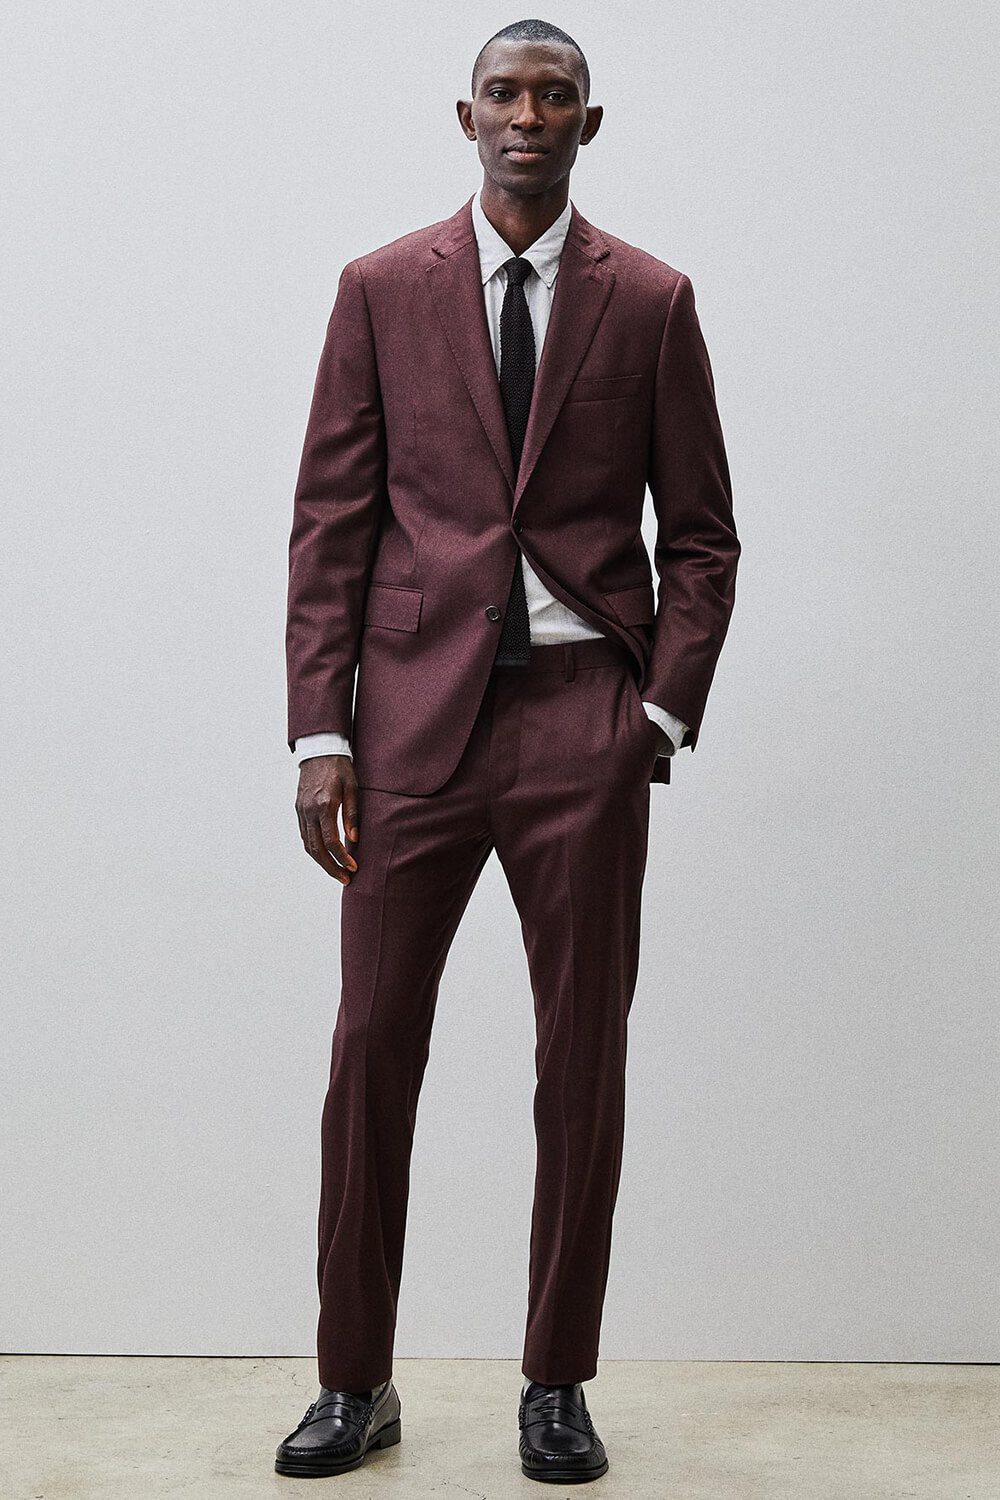 Trendy suits for men